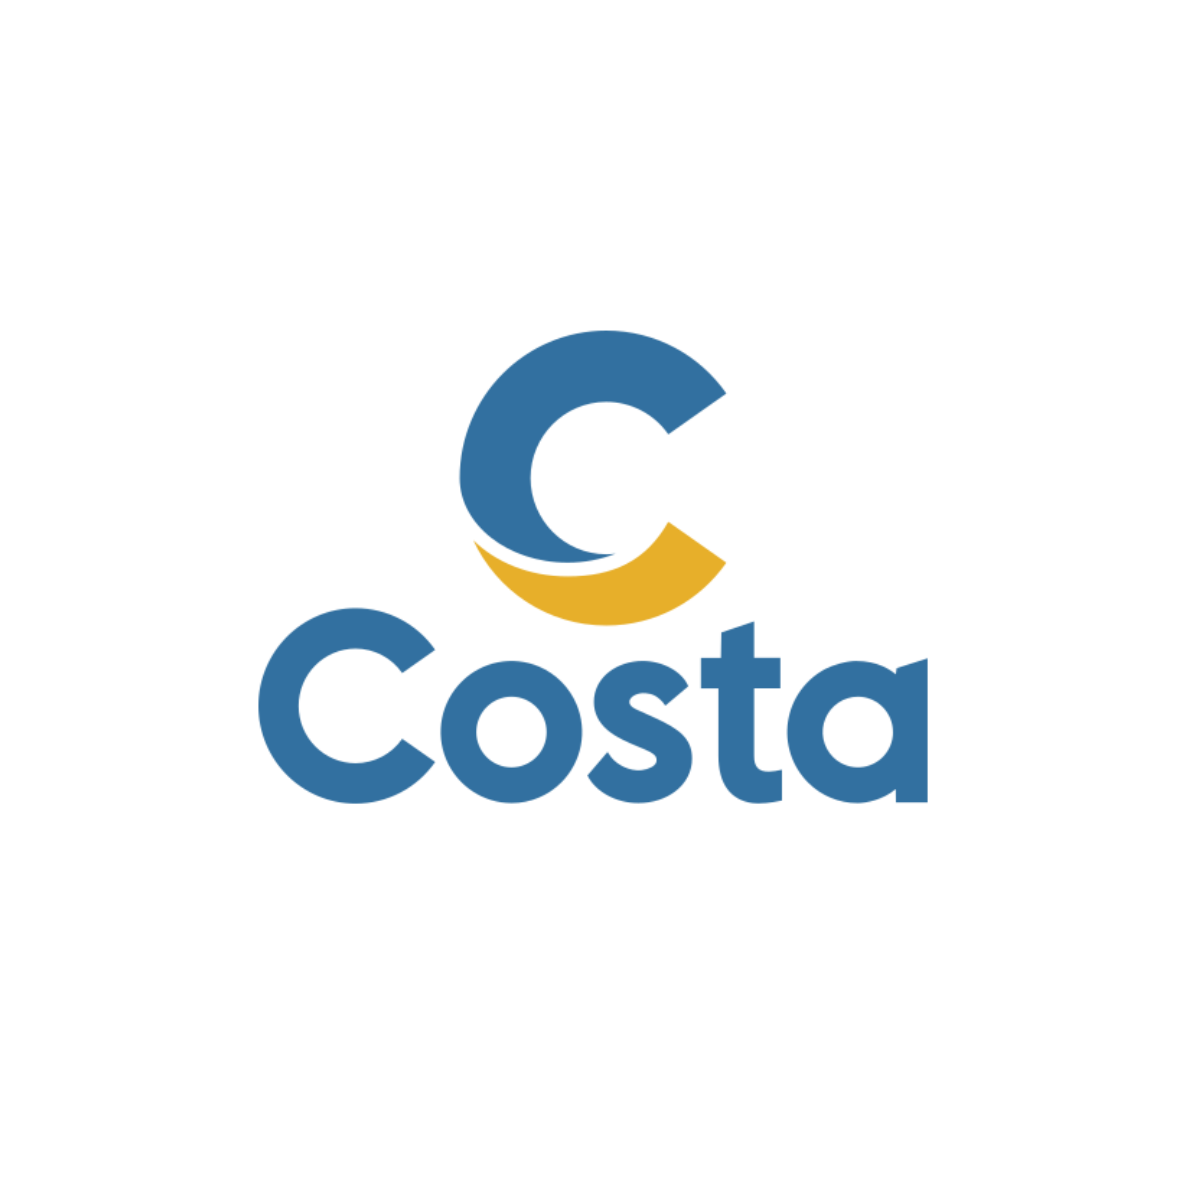 costa cruises logo